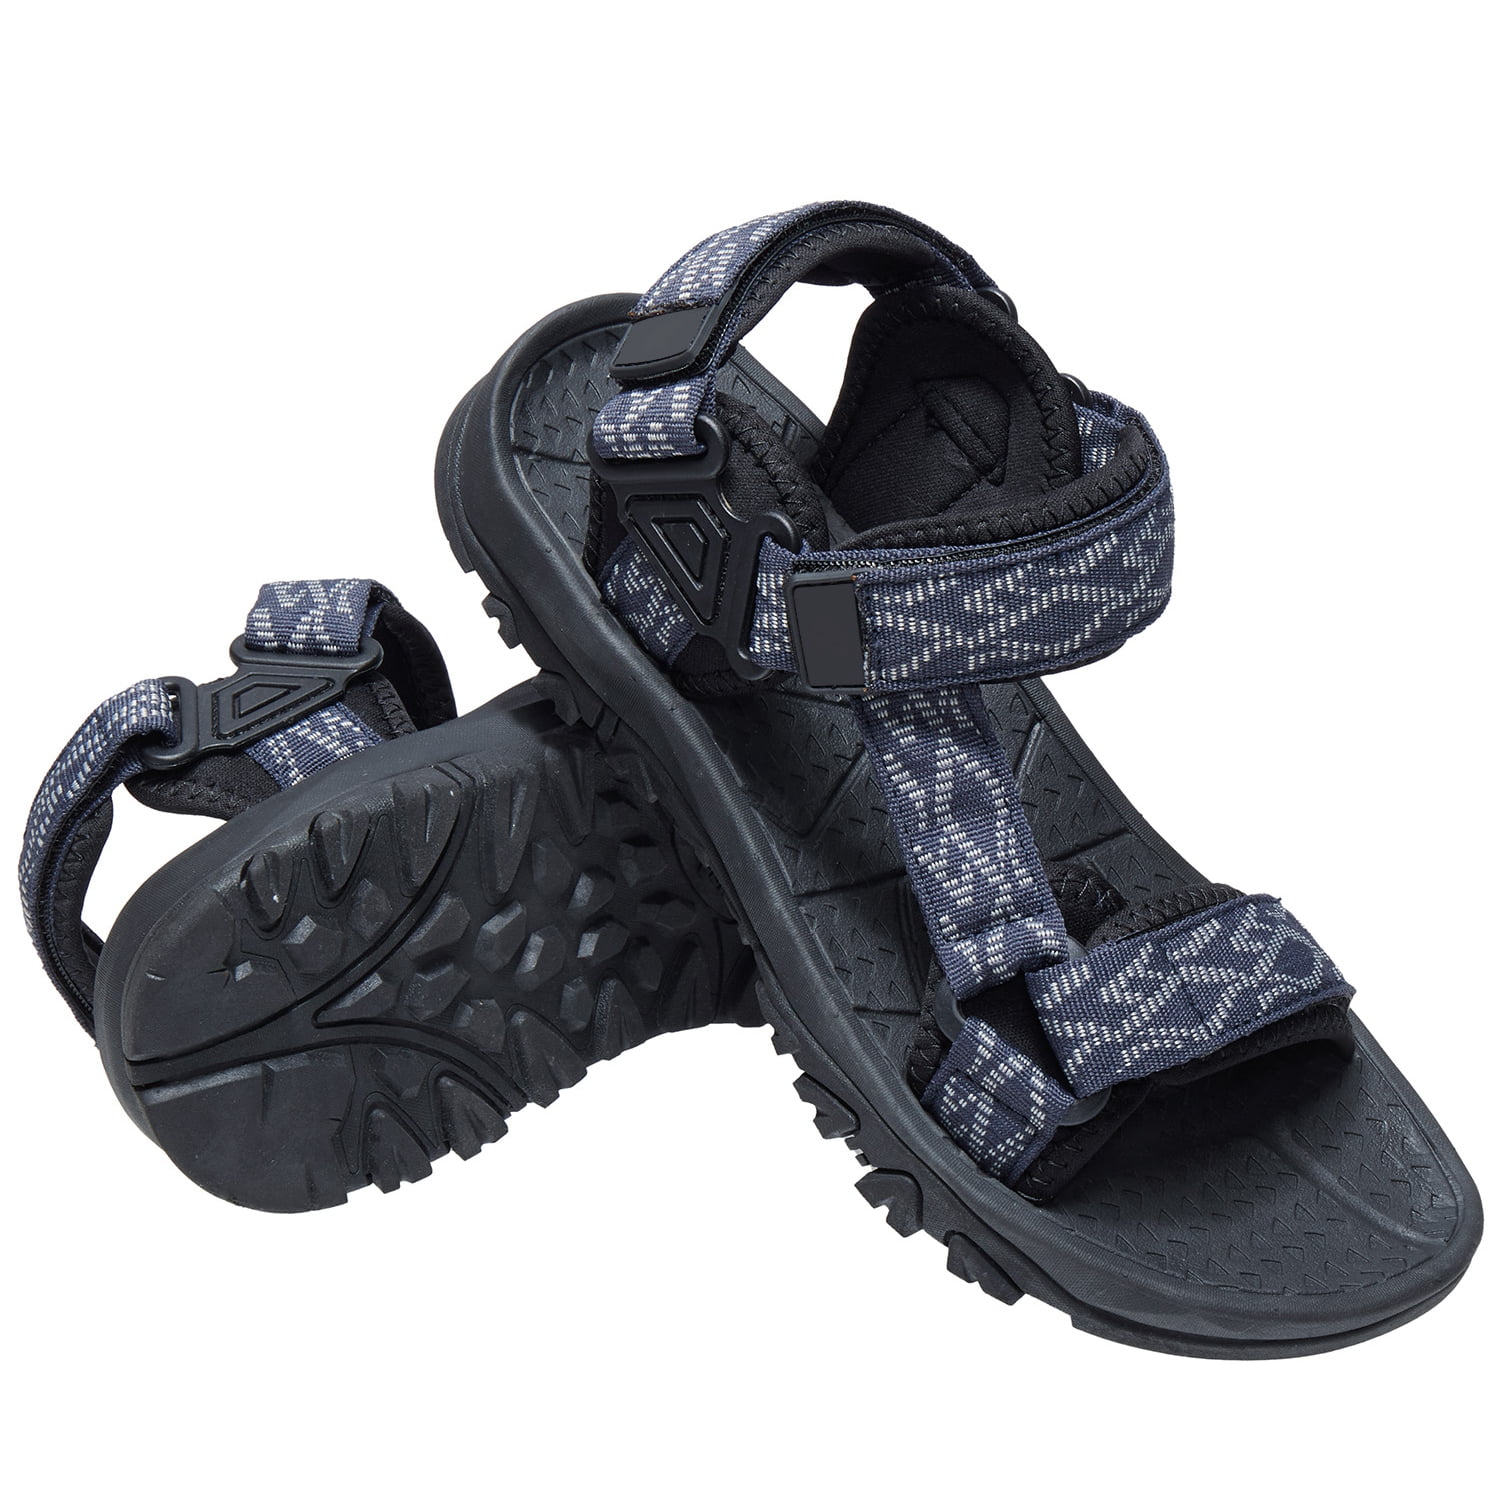 OutPro Men's Sandals Lightweight Hiking Water Beach Open Toe Athletic ...